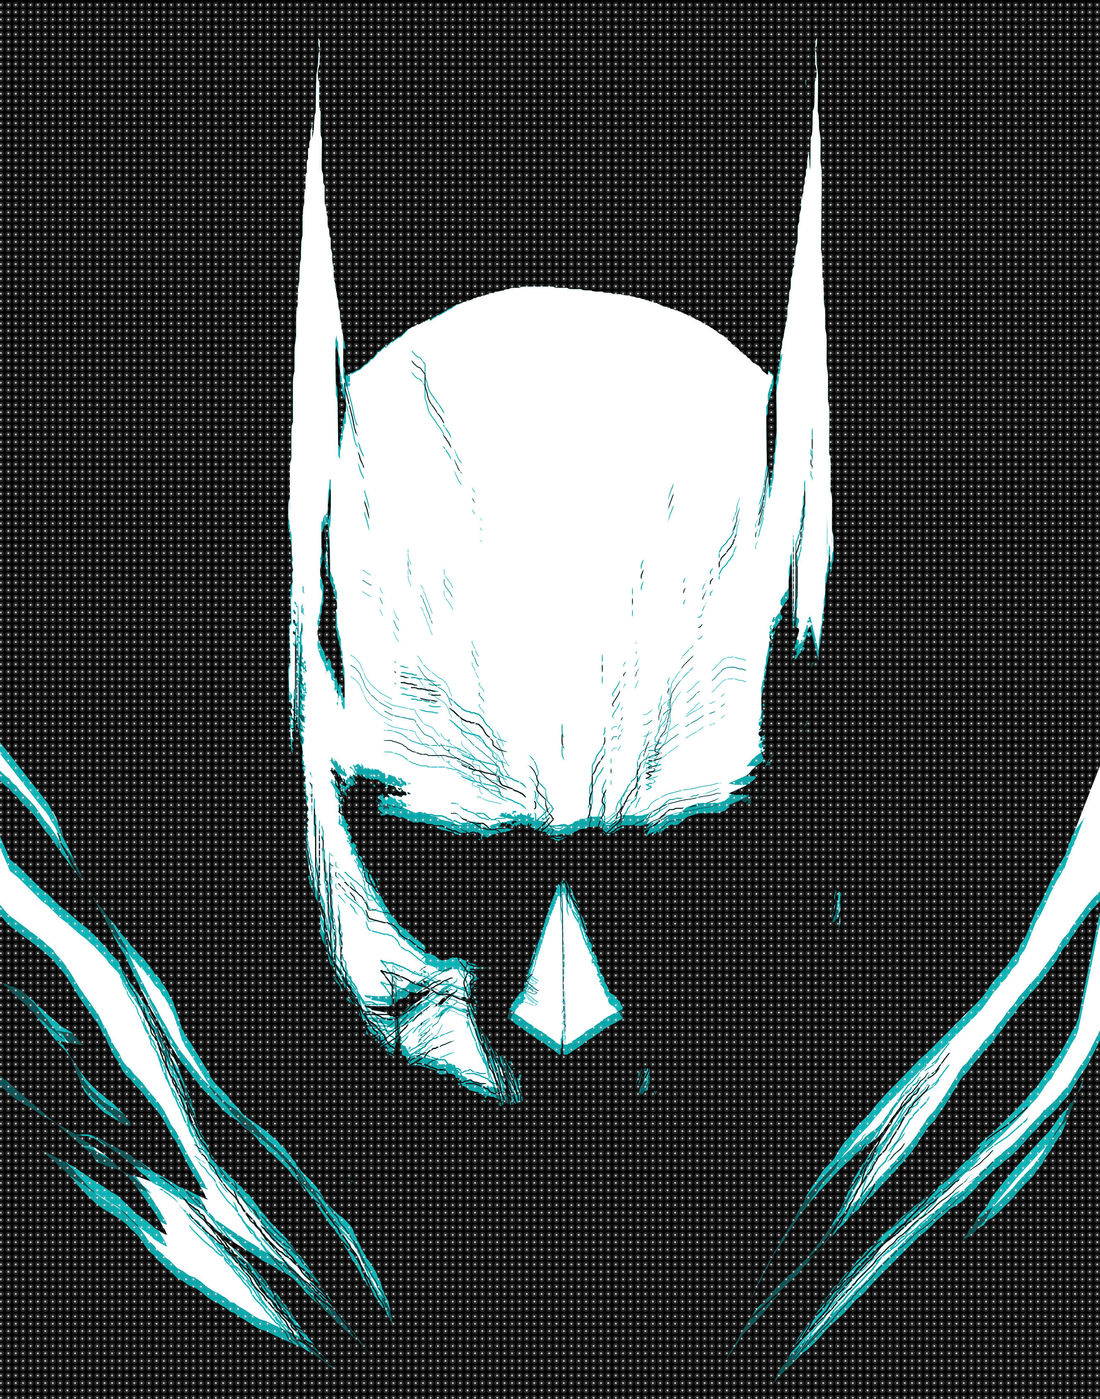 Lemire & Sorrentino Return for DC Black Label Batman One-Shot